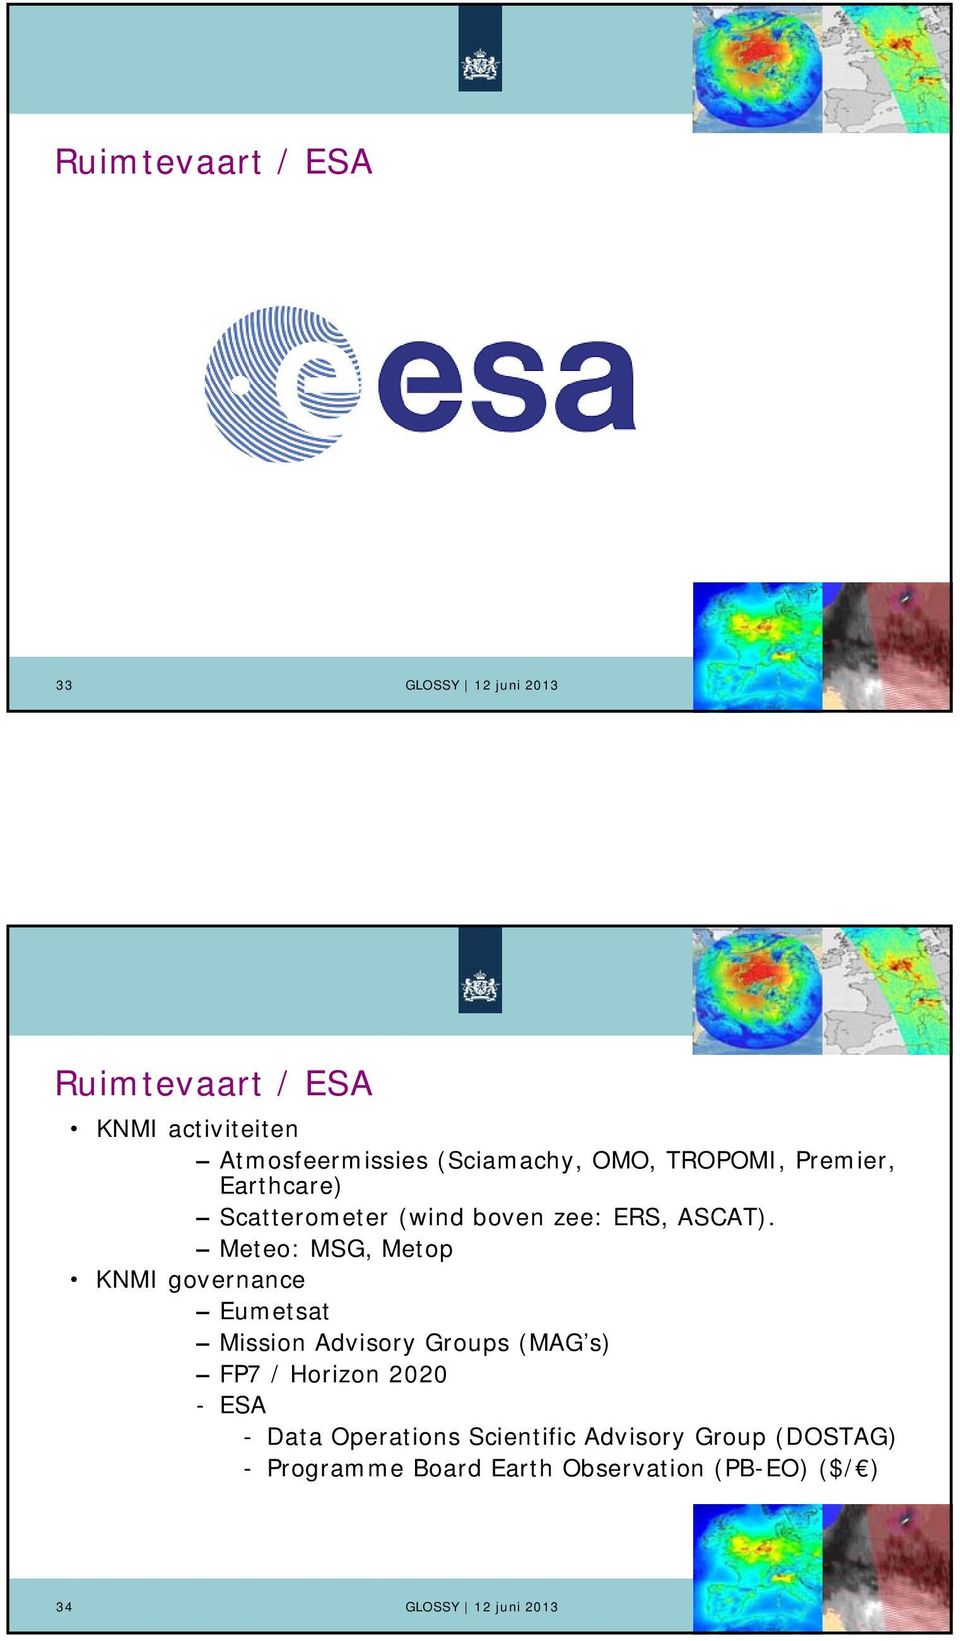 Meteo: MSG, Metop KNMI governance Eumetsat Mission Advisory Groups (MAG s) FP7 / Horizon